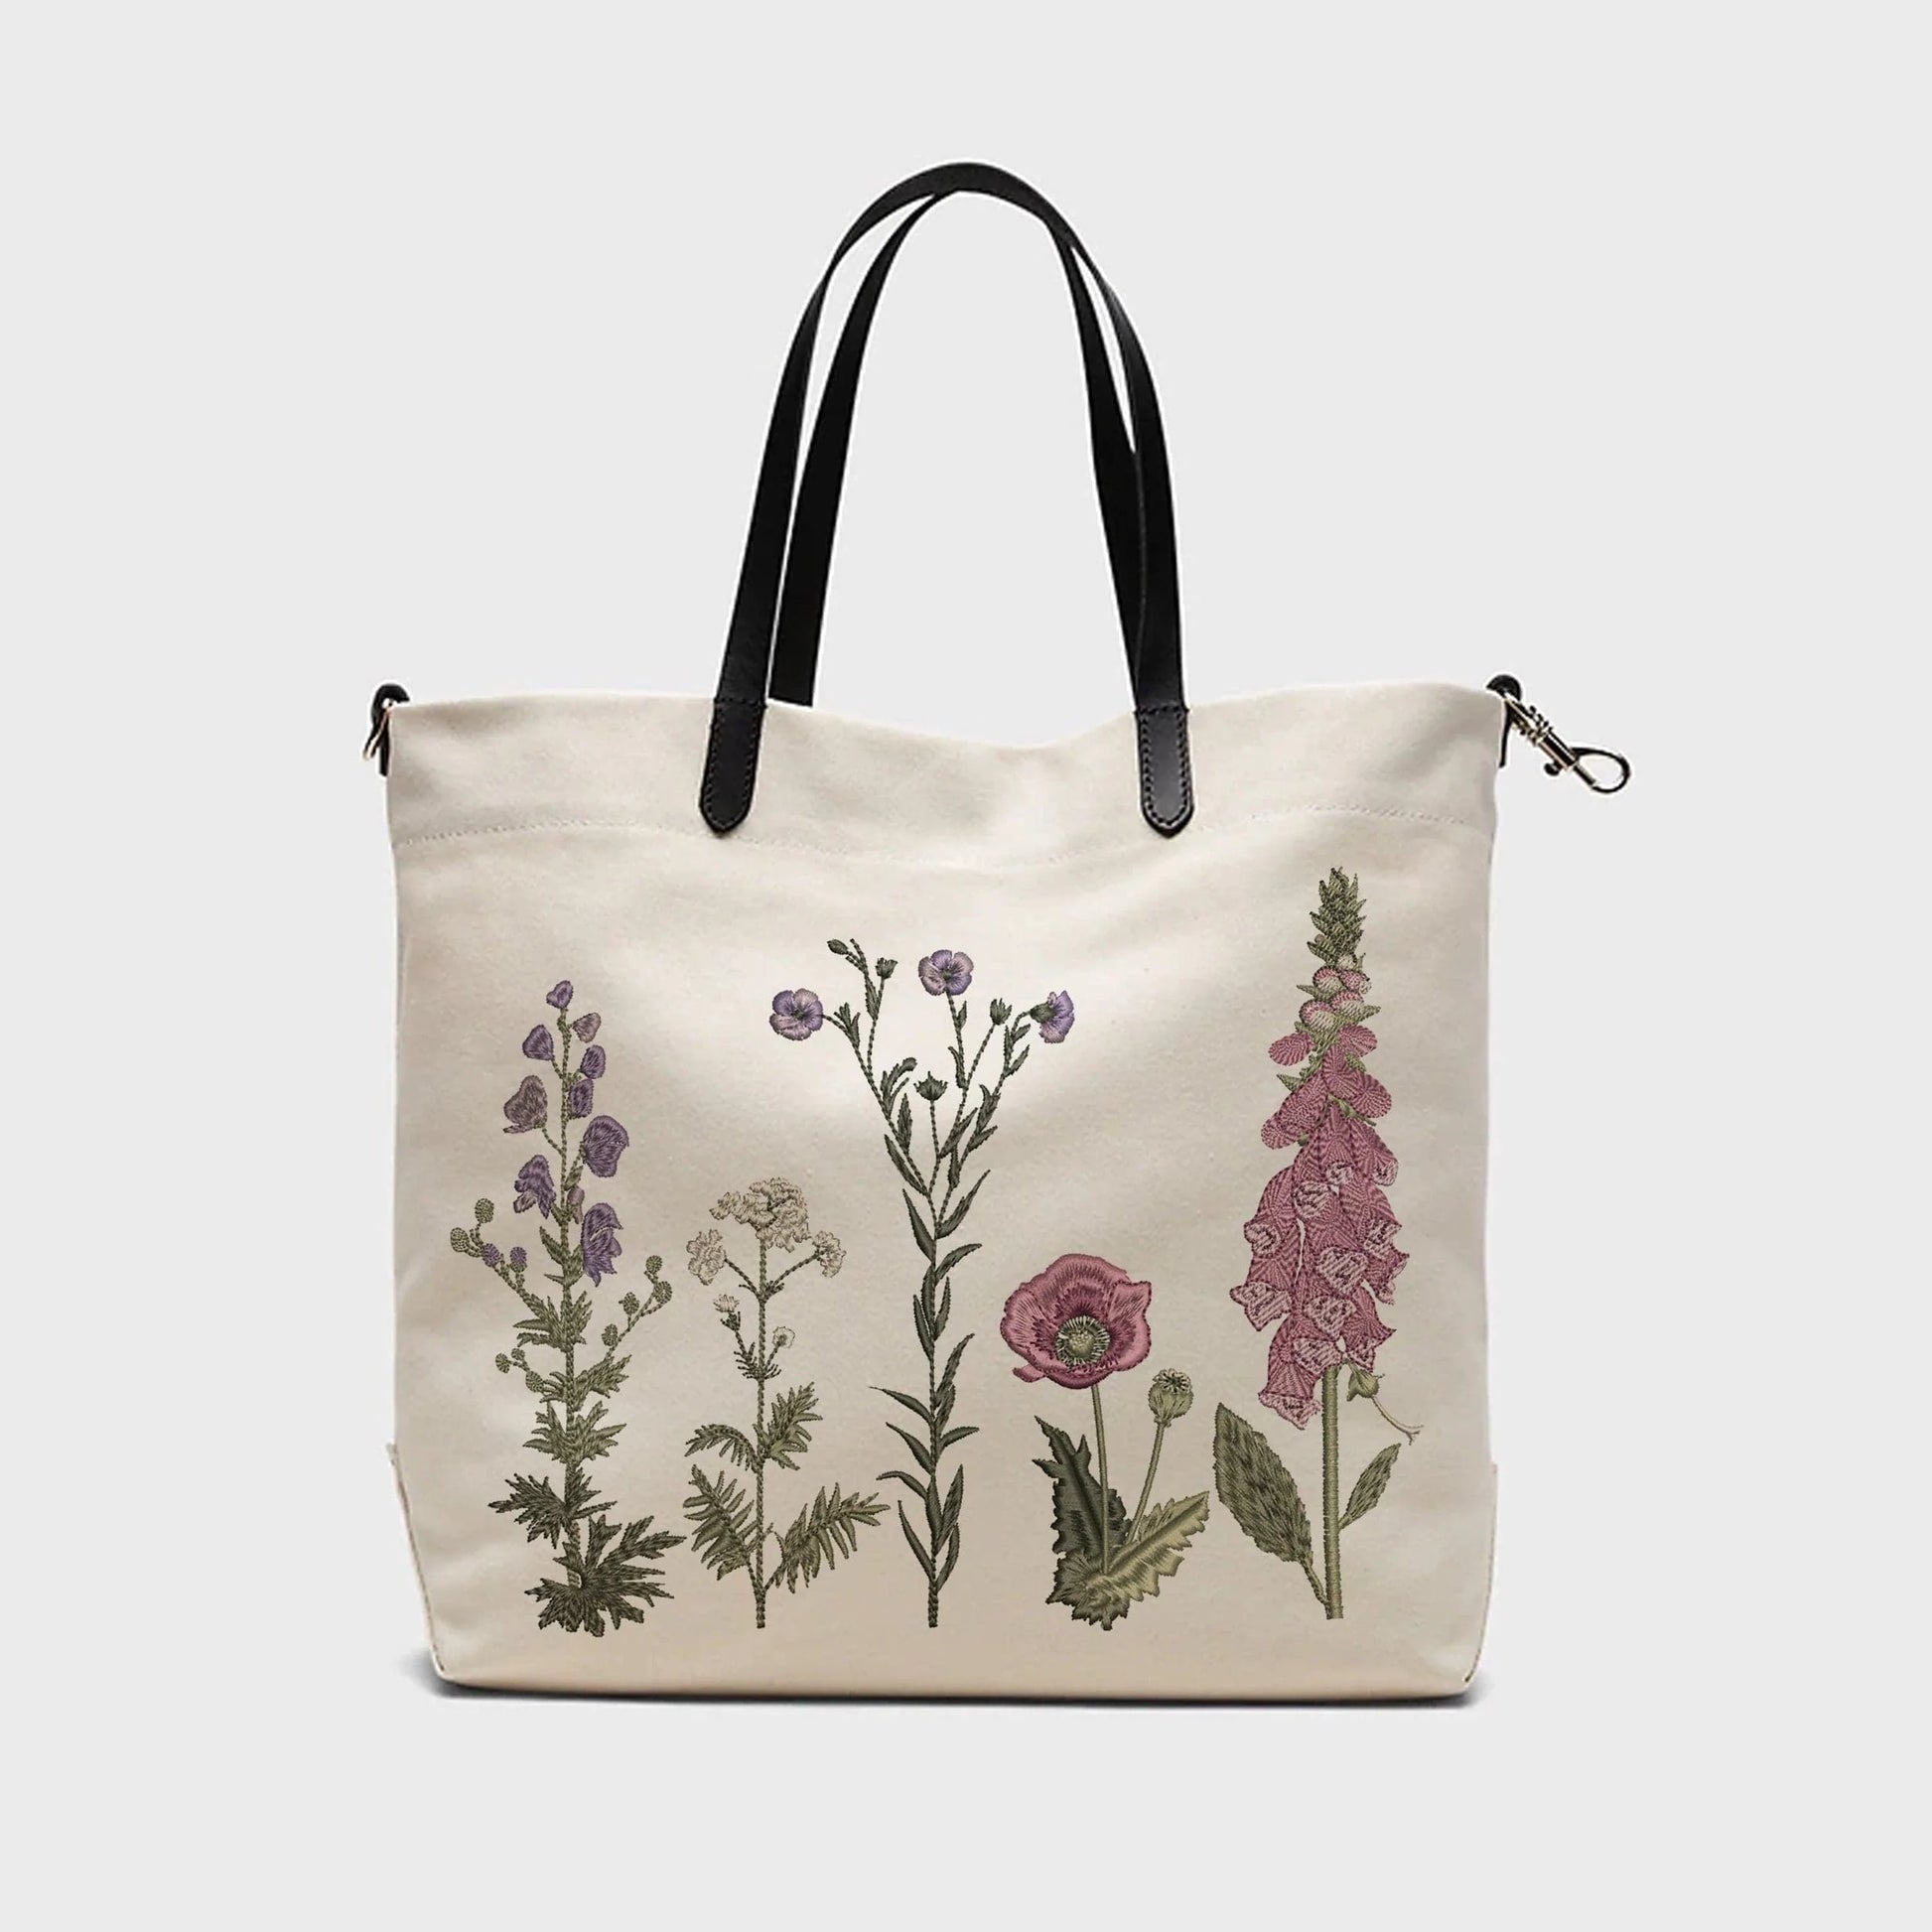 Fairy Garden Flowers Machine Embroidery Design on canvas handbag